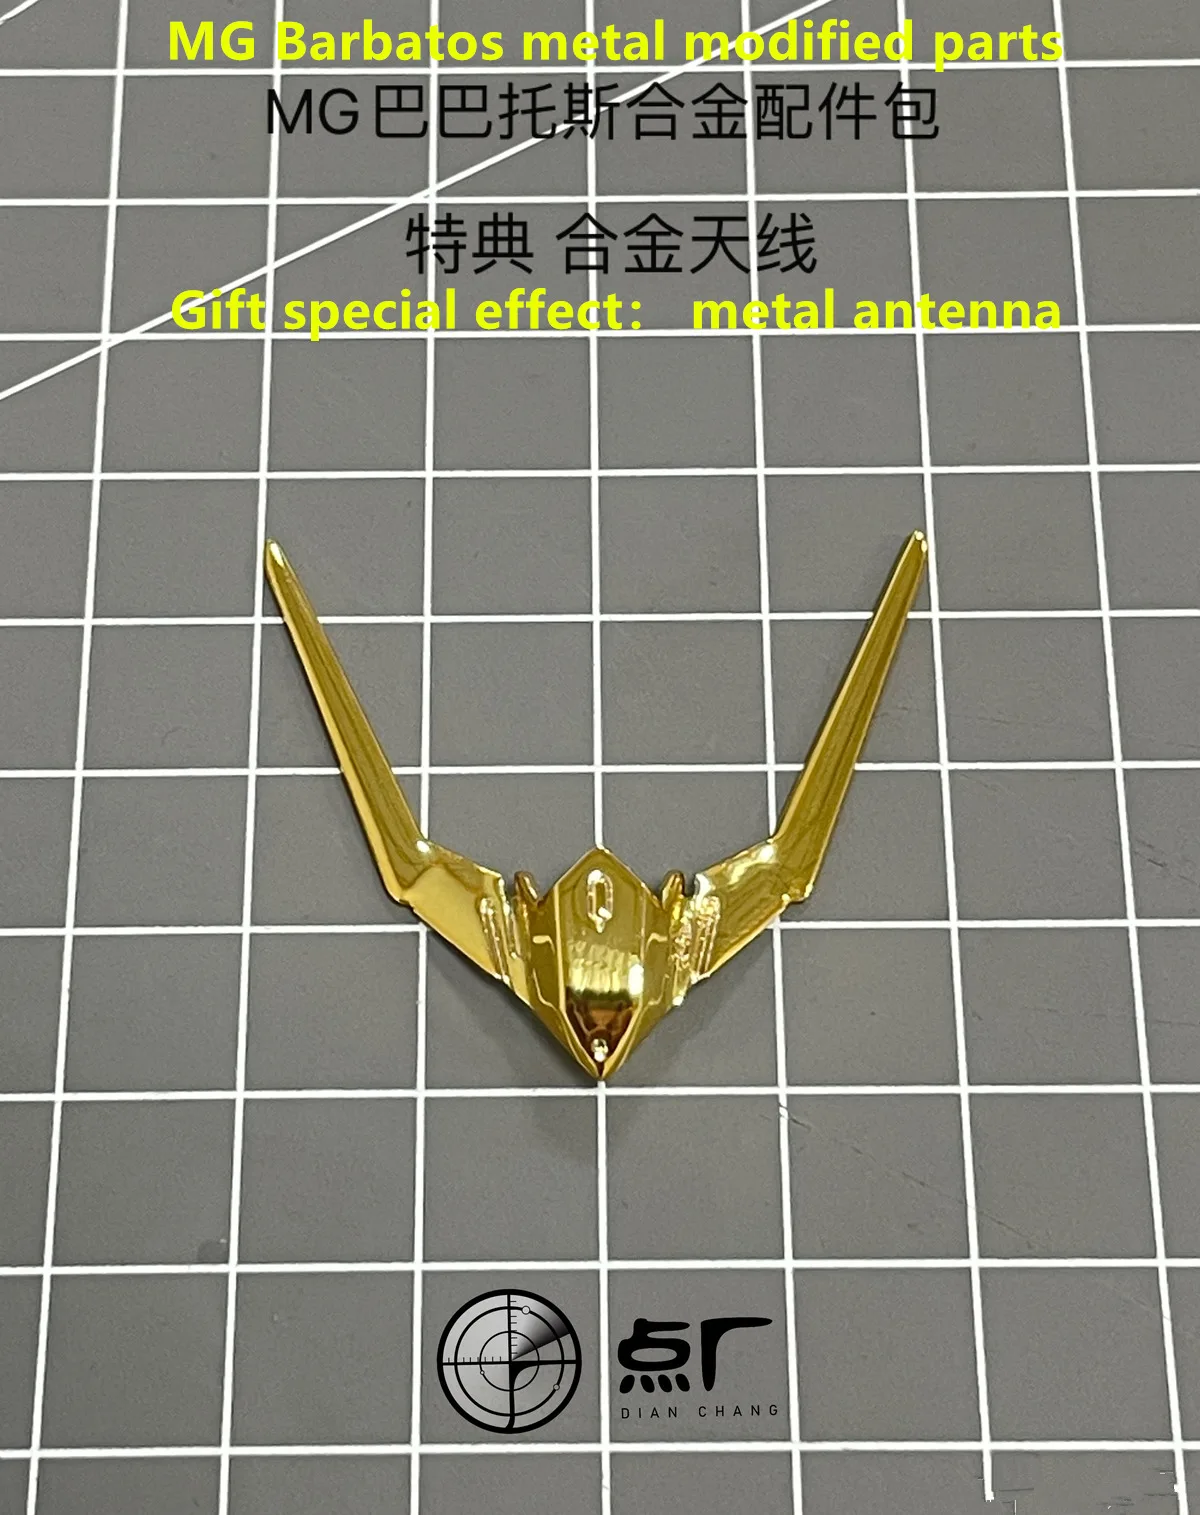 PFS reinforced metal modified parts for Bandai MG 1/100 ASW-G-08 Barbatos Gundam 